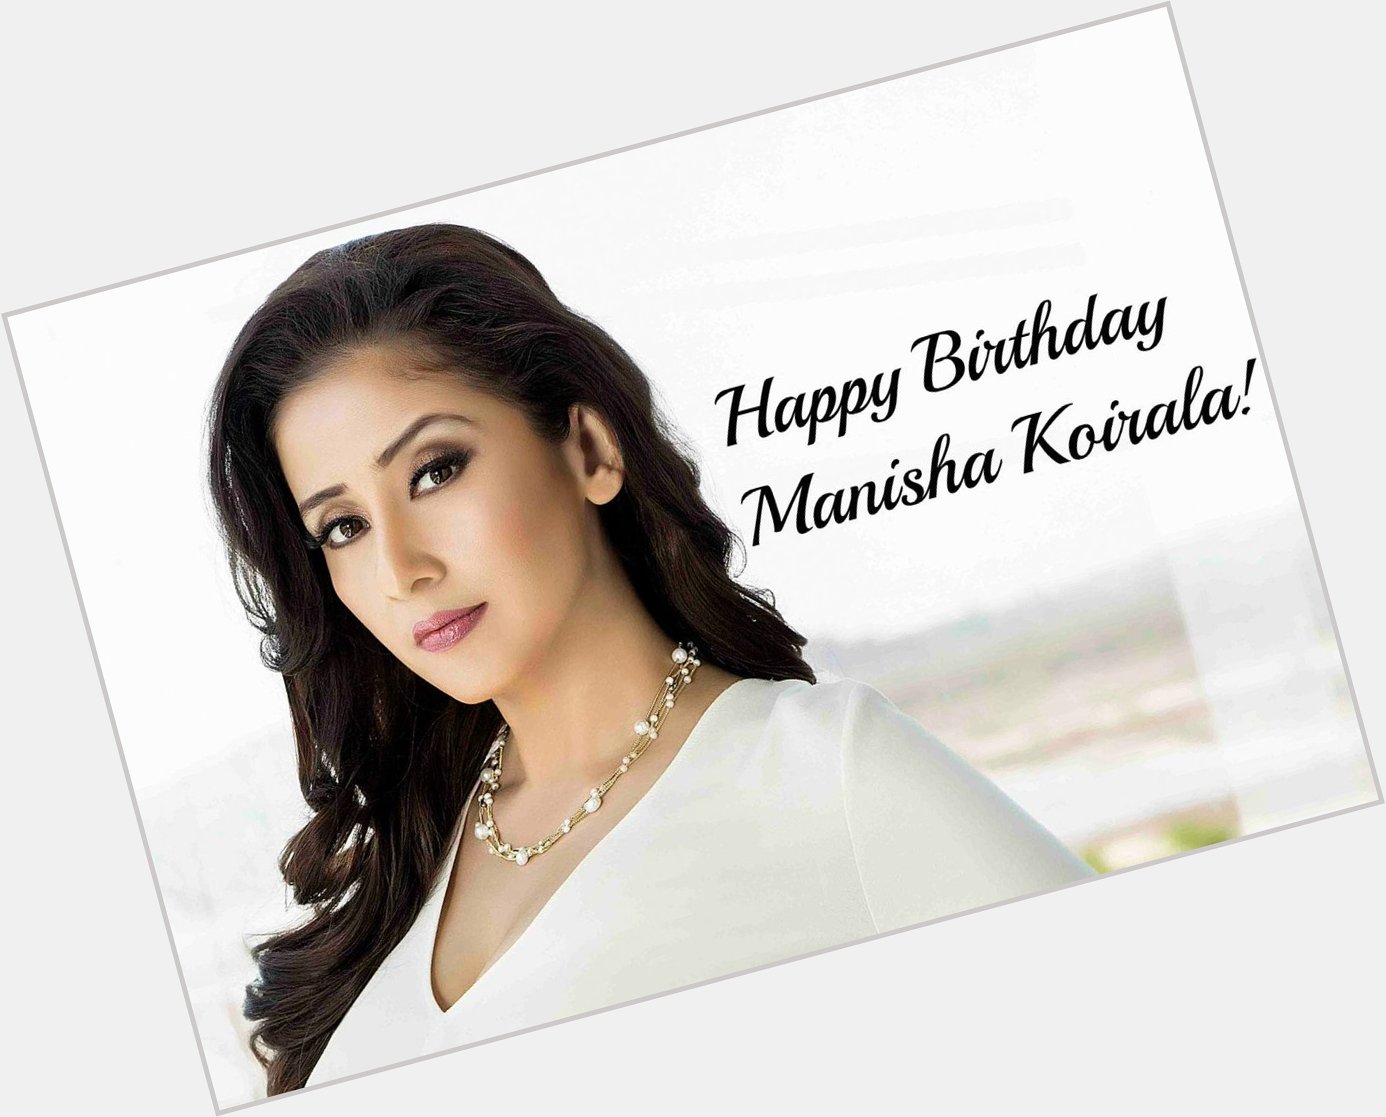 Best wishes the stunningly beautiful- Manisha koirala, a very happy birthday!        